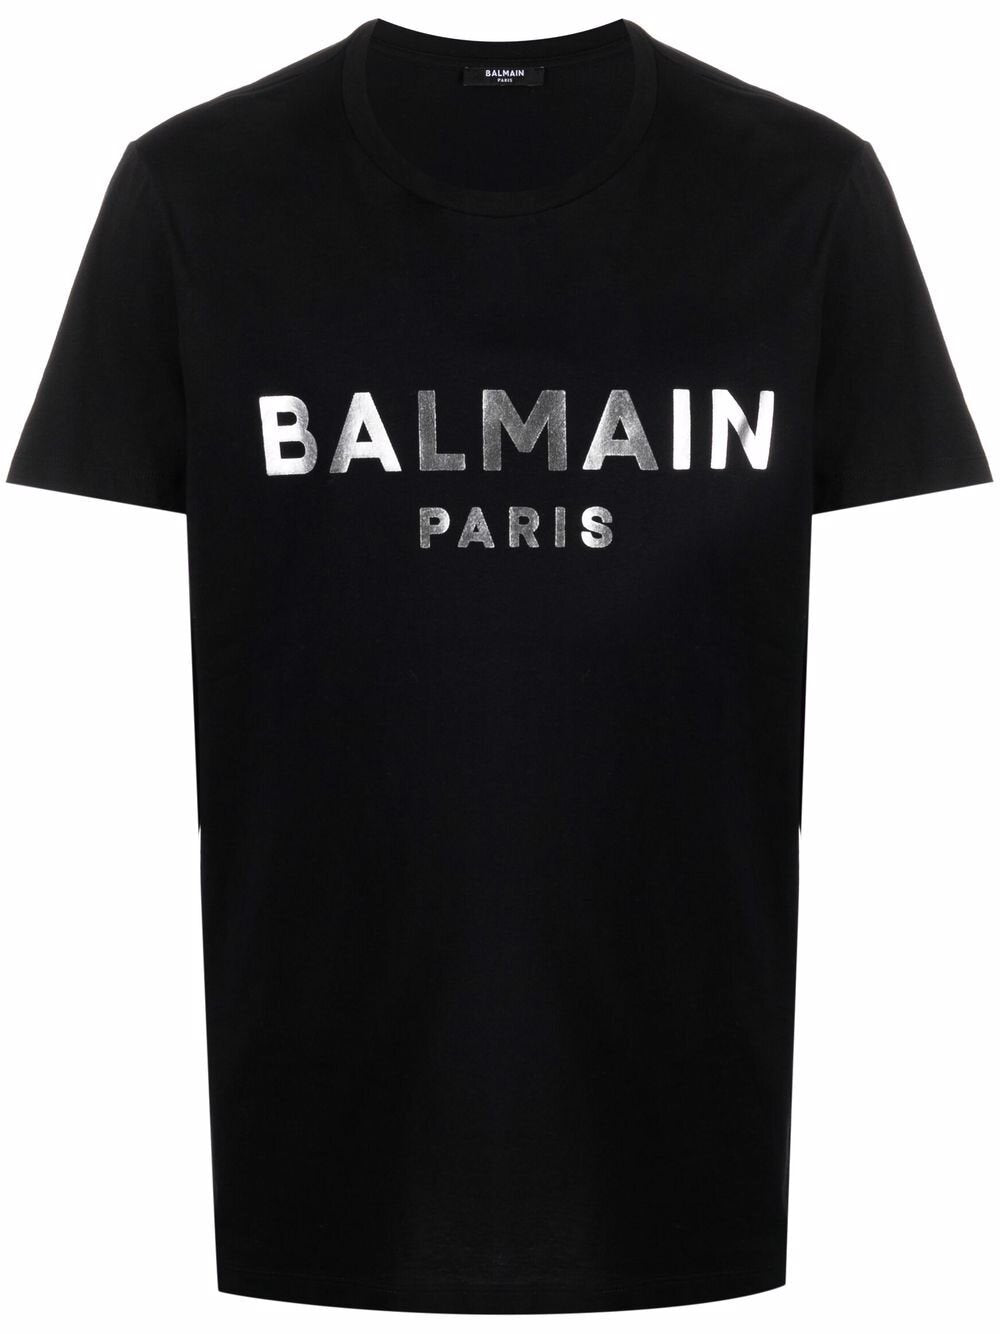 Balmain Silver logo print T-Shirt in Black